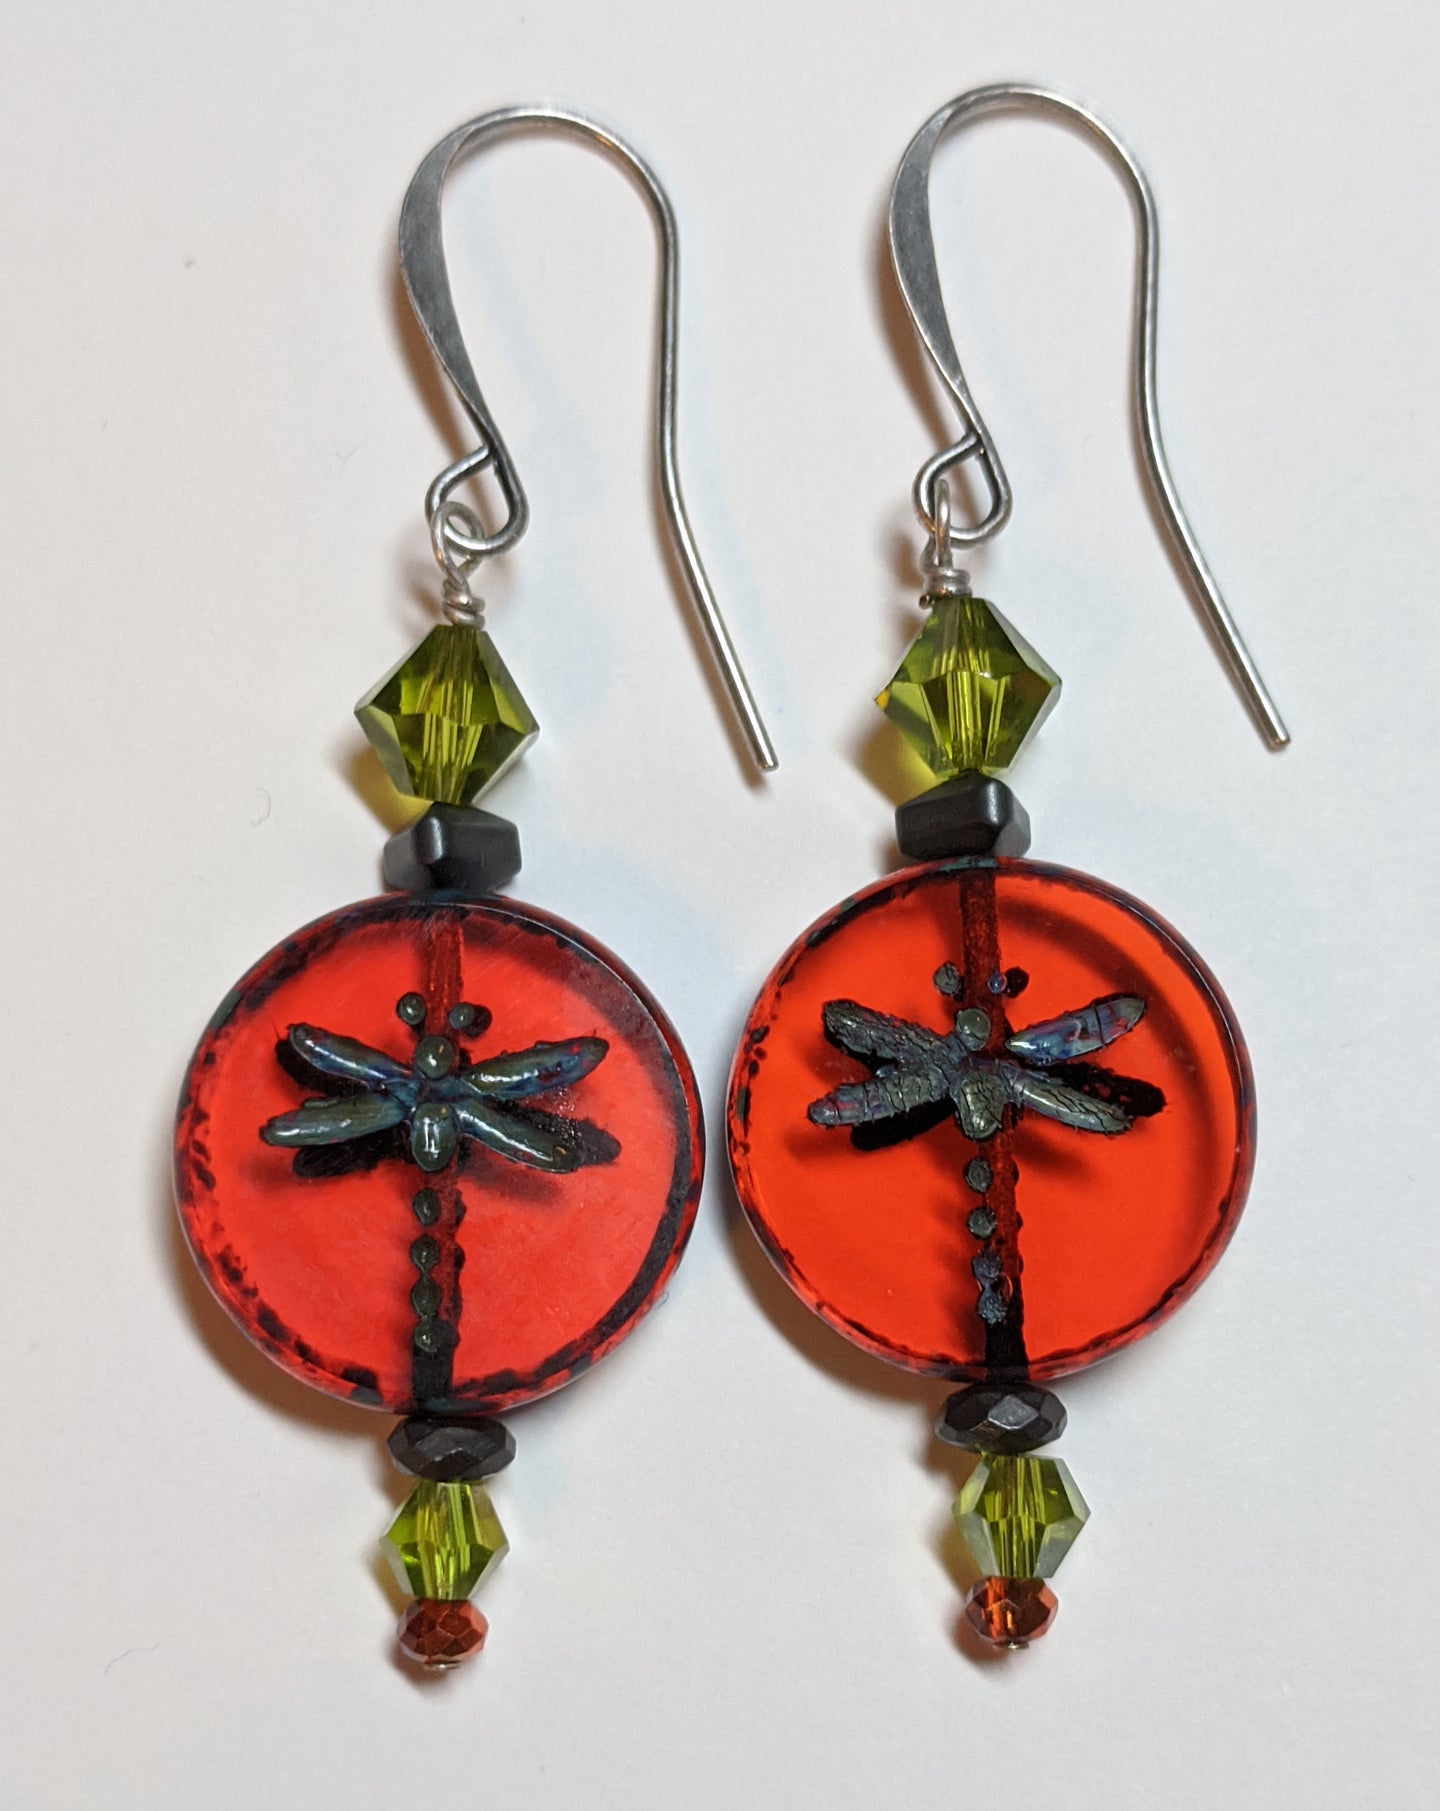 dragonfly earrings # 4 - sunroot studio